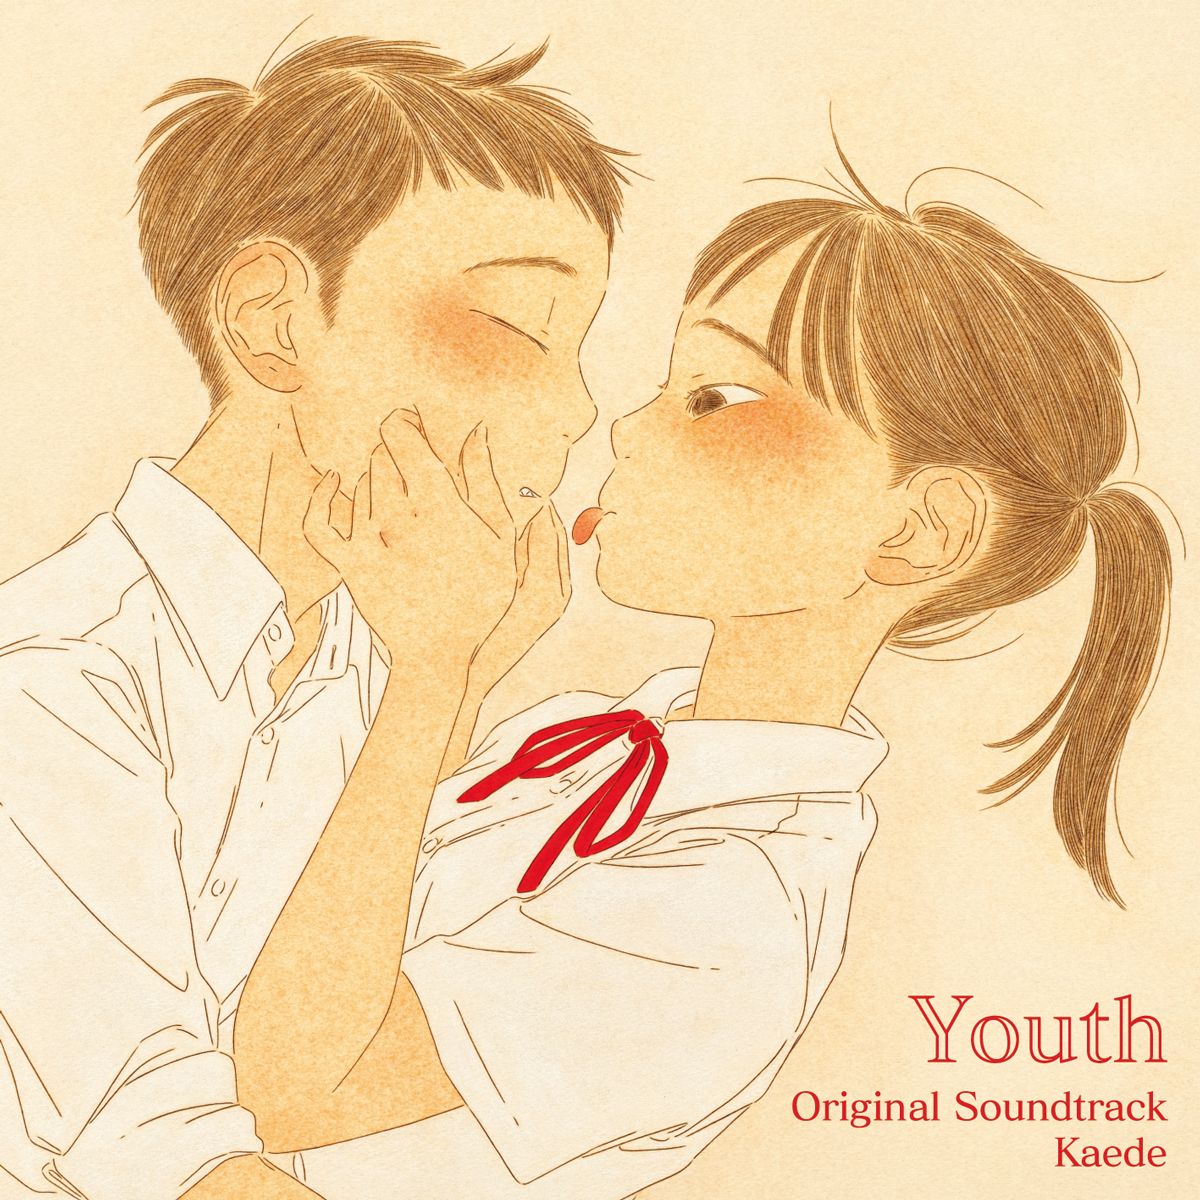 Youth - Original Soundtrack